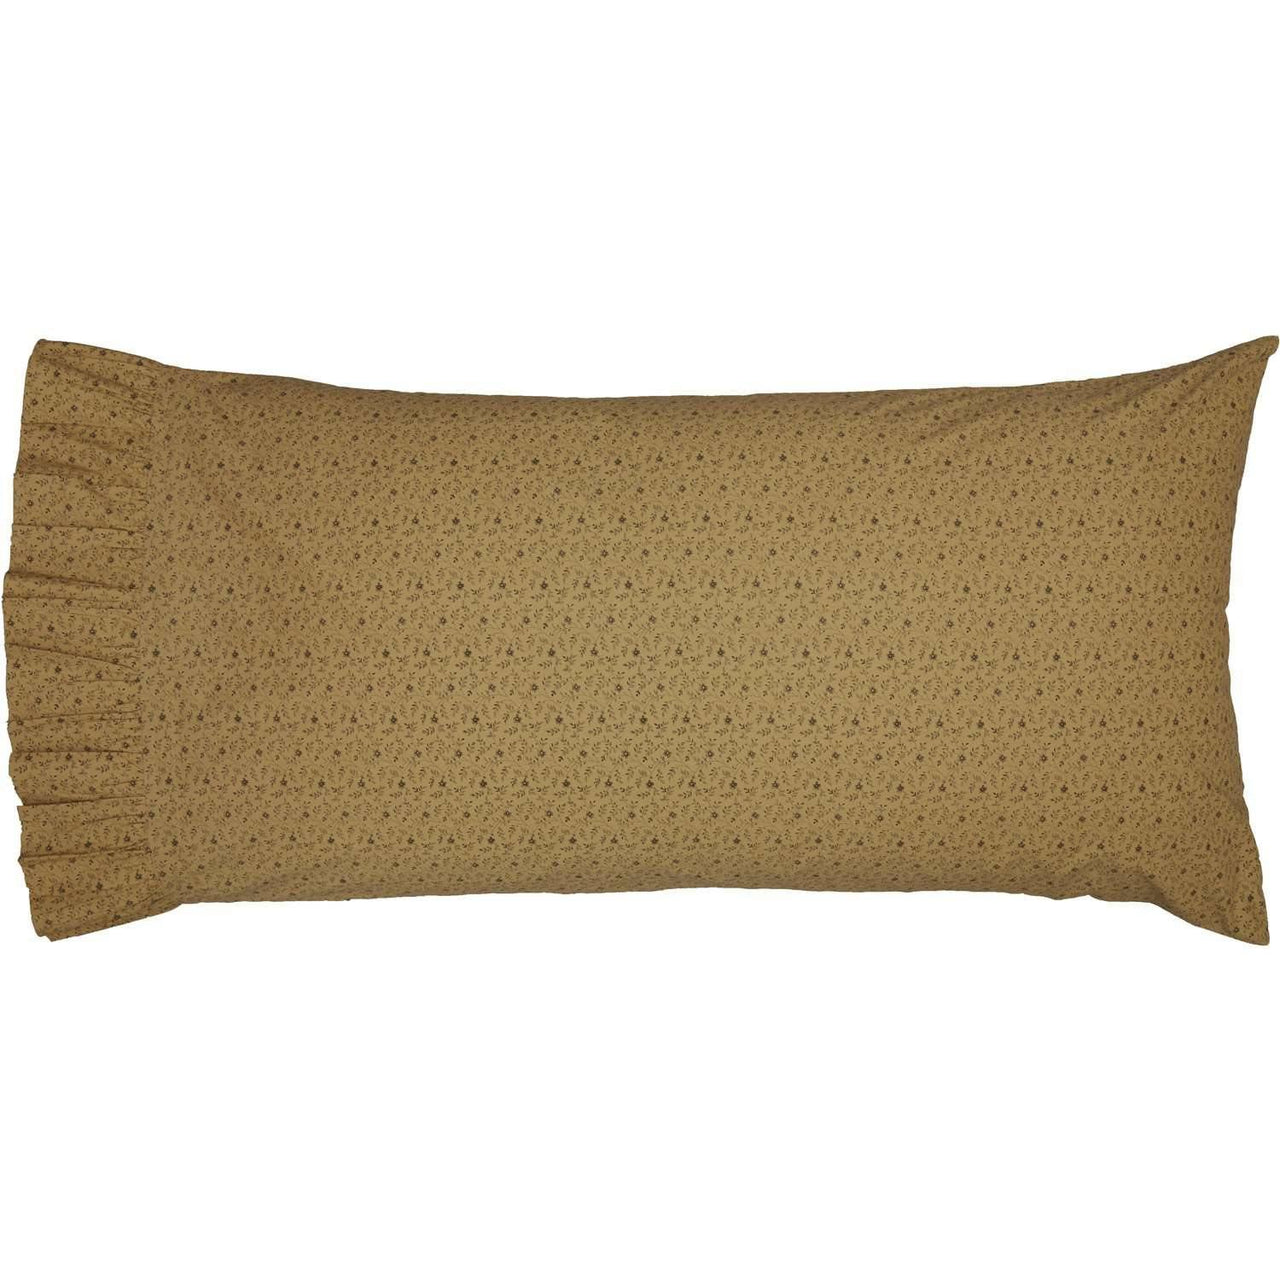 Maisie King Pillow Case Set of 2 21x40 VHC Brands - The Fox Decor